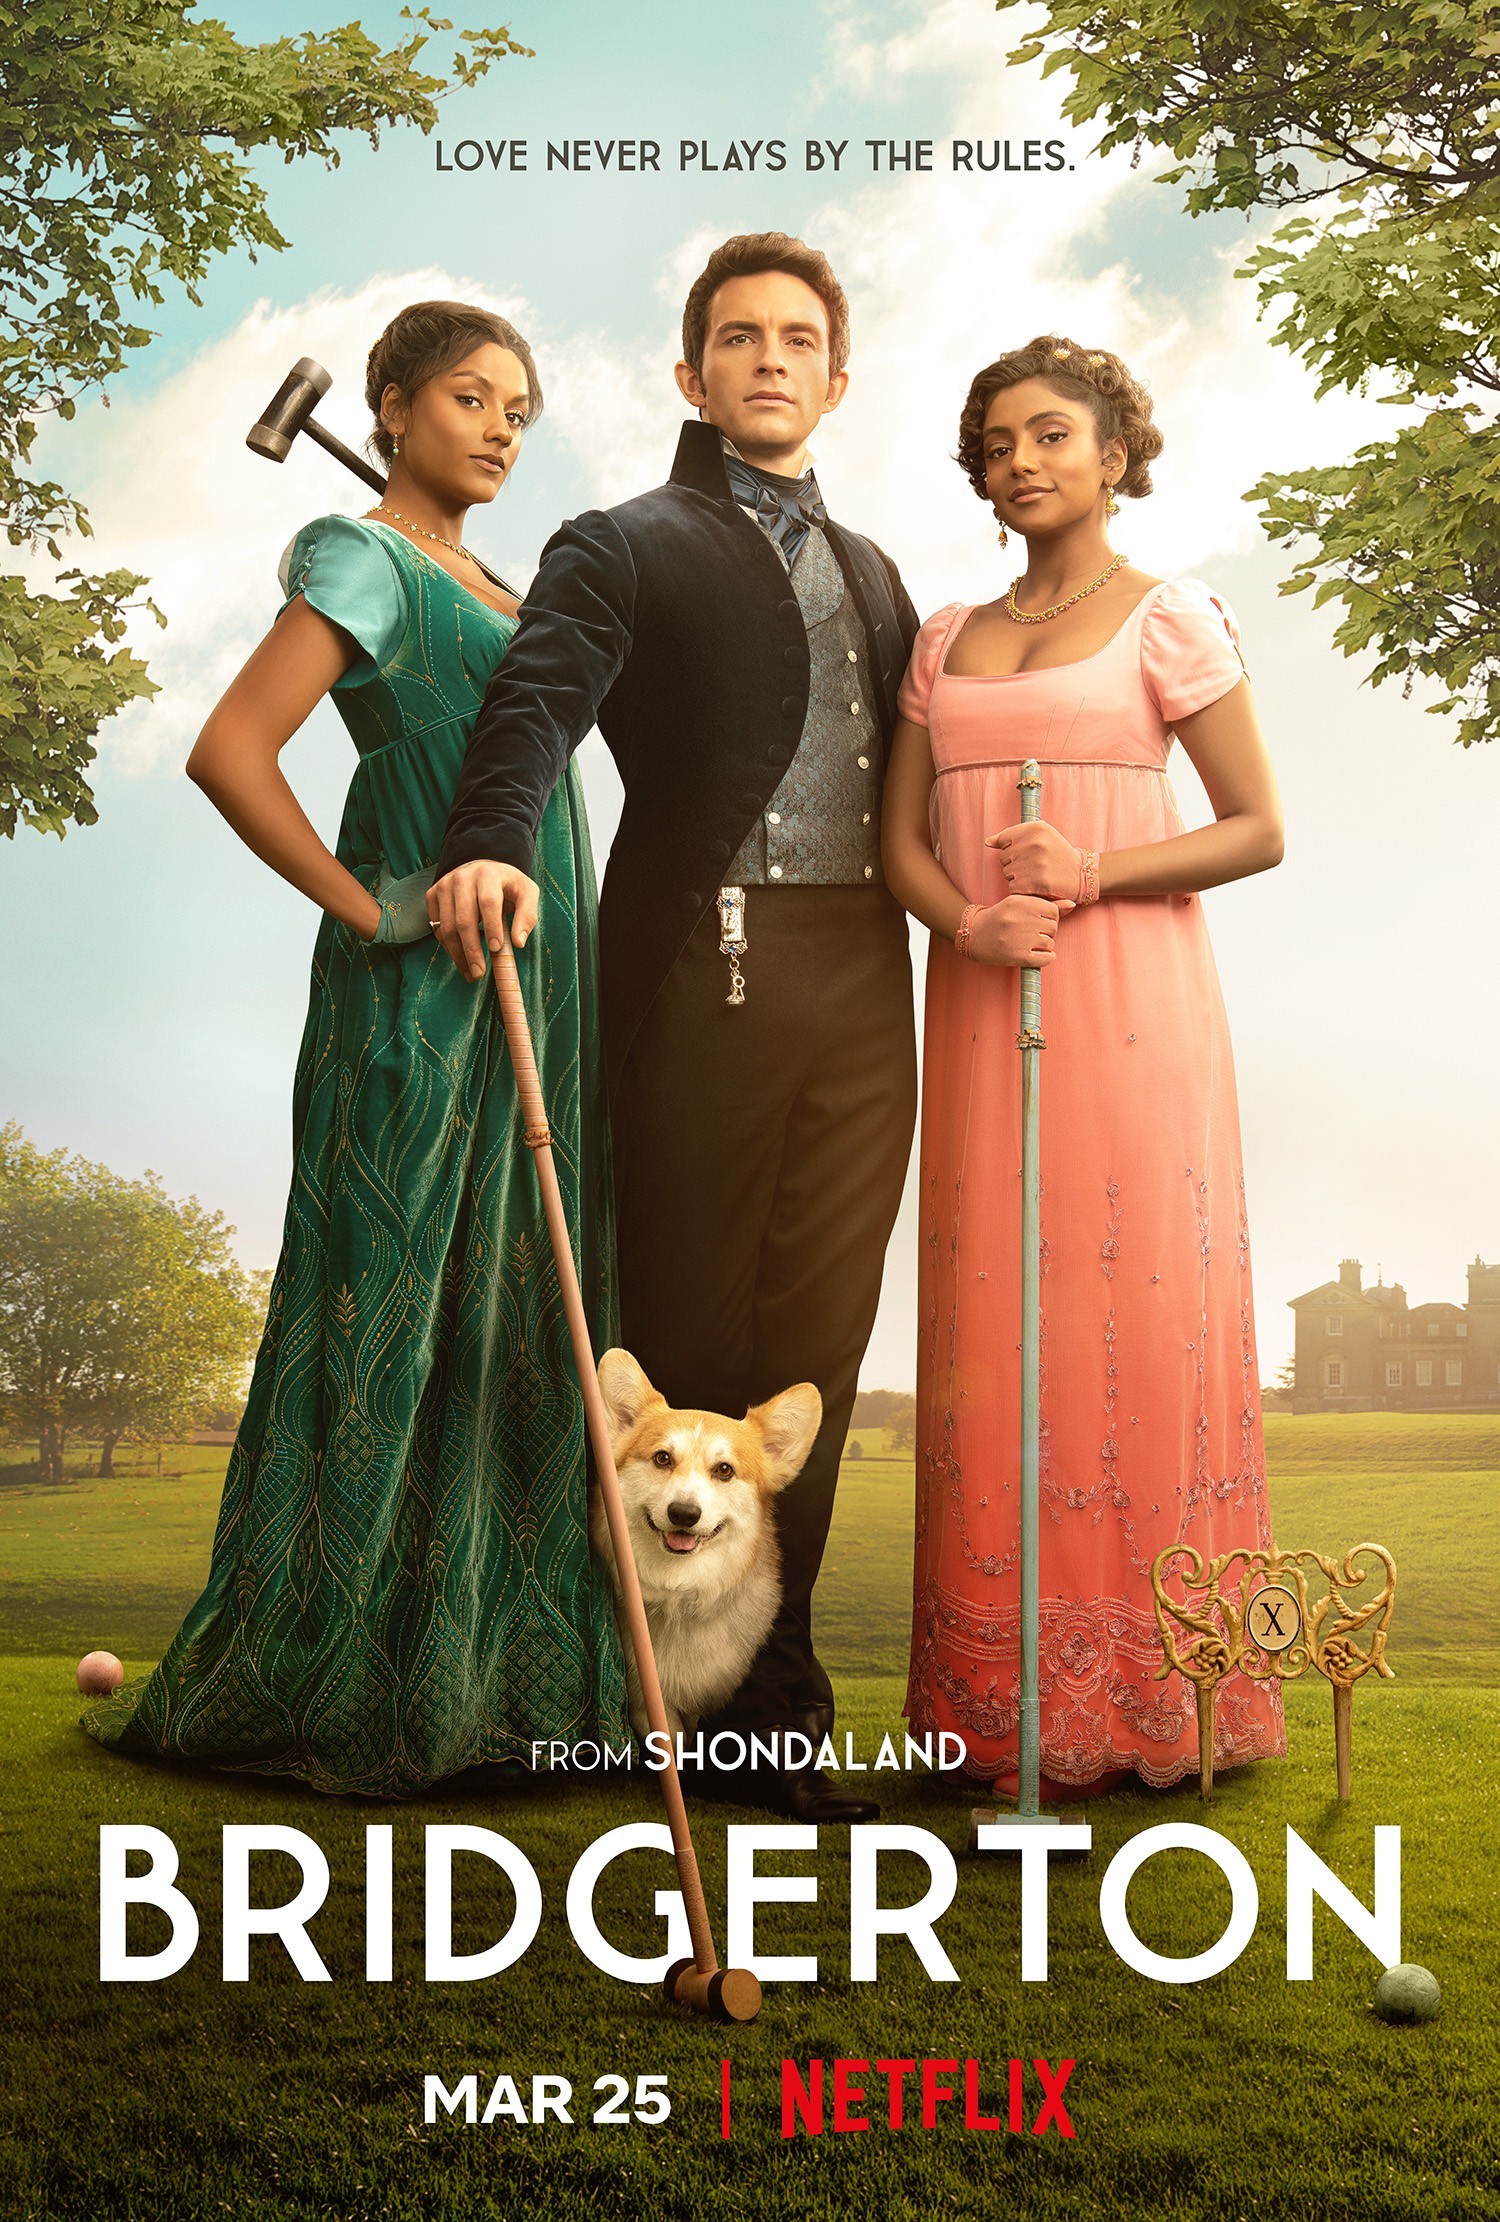 Bridgerton Season 2 Air Date - When Does Season 2 of Bridgerton Come Out